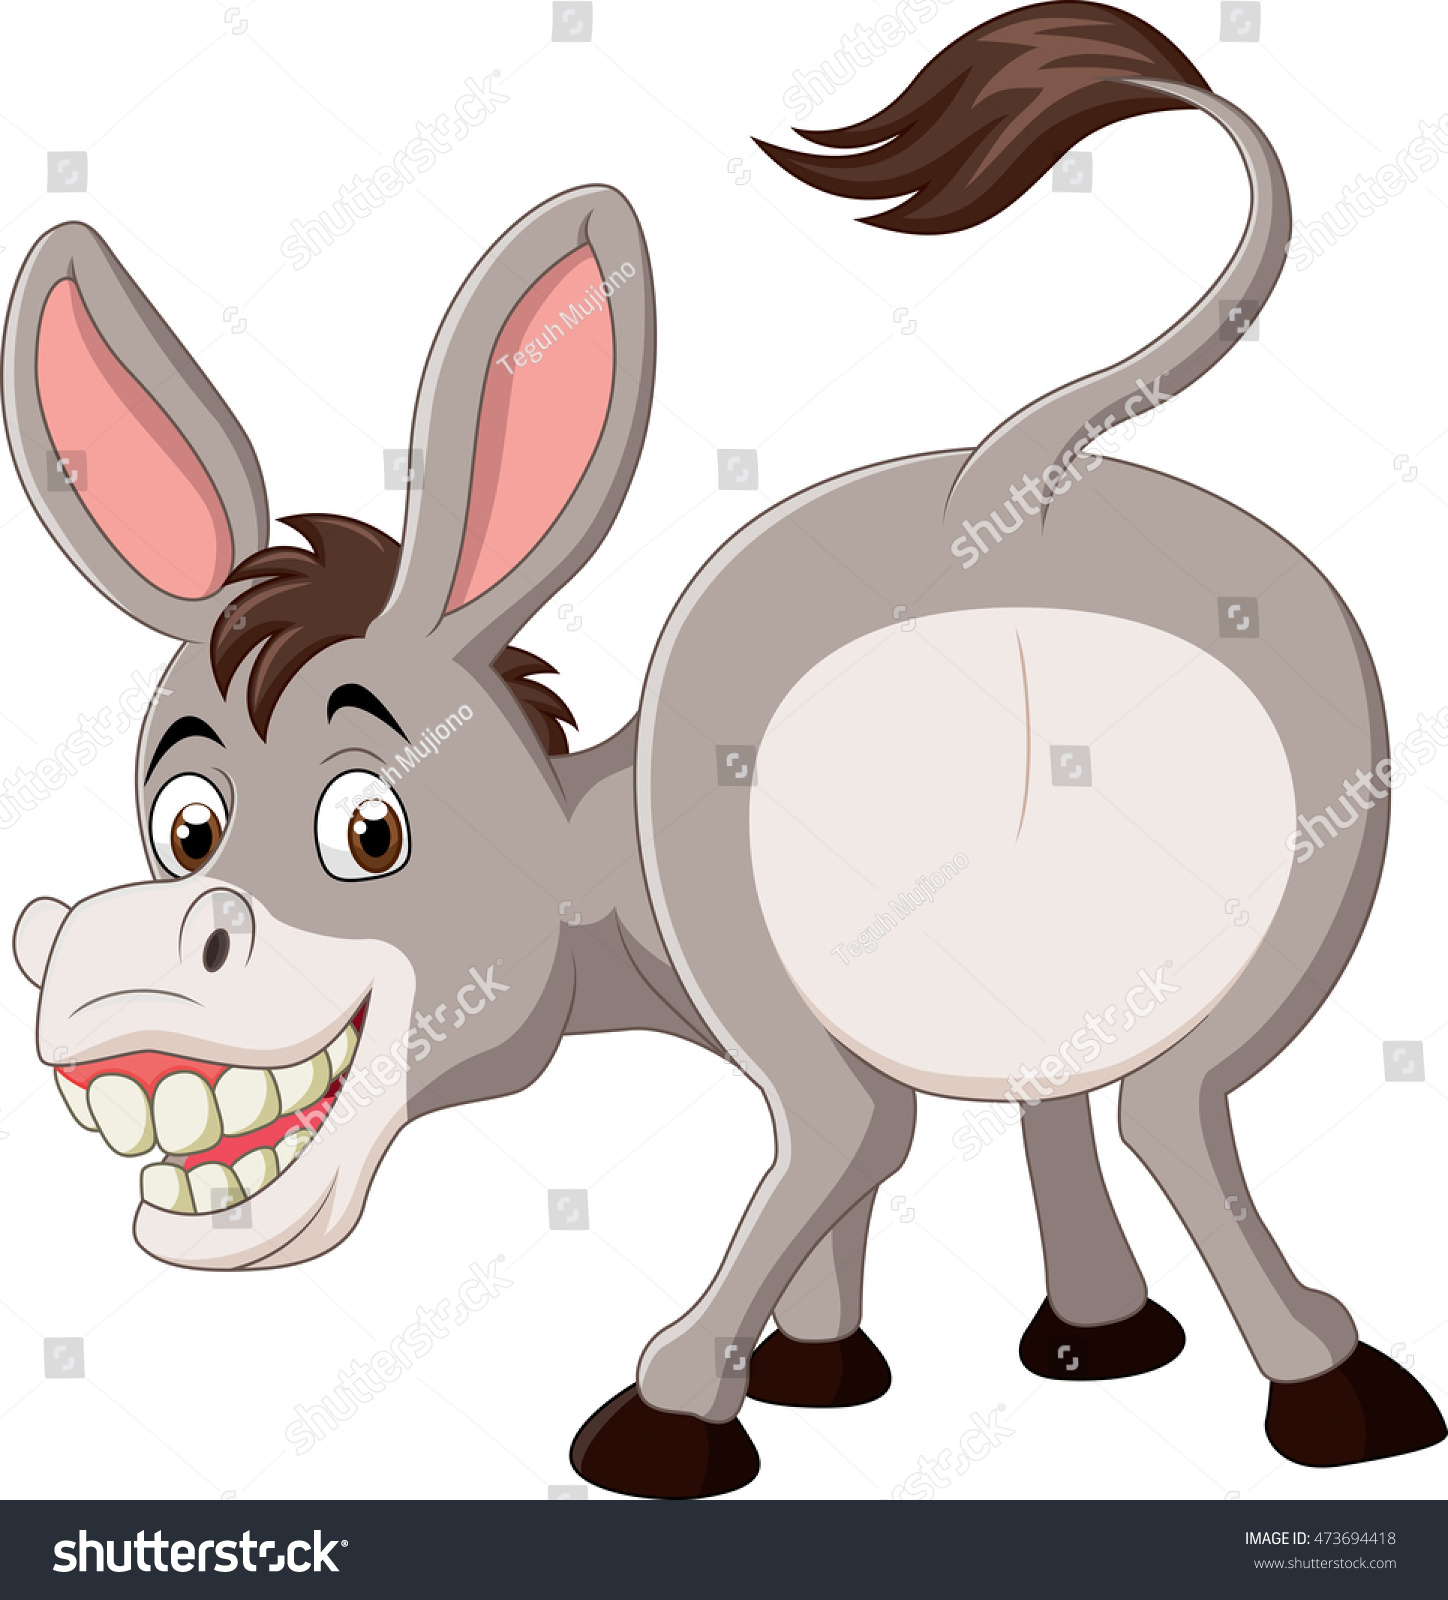 1 279 張 Funny donkey cartoon faces 圖片庫存照片和向量圖 Shutterstock